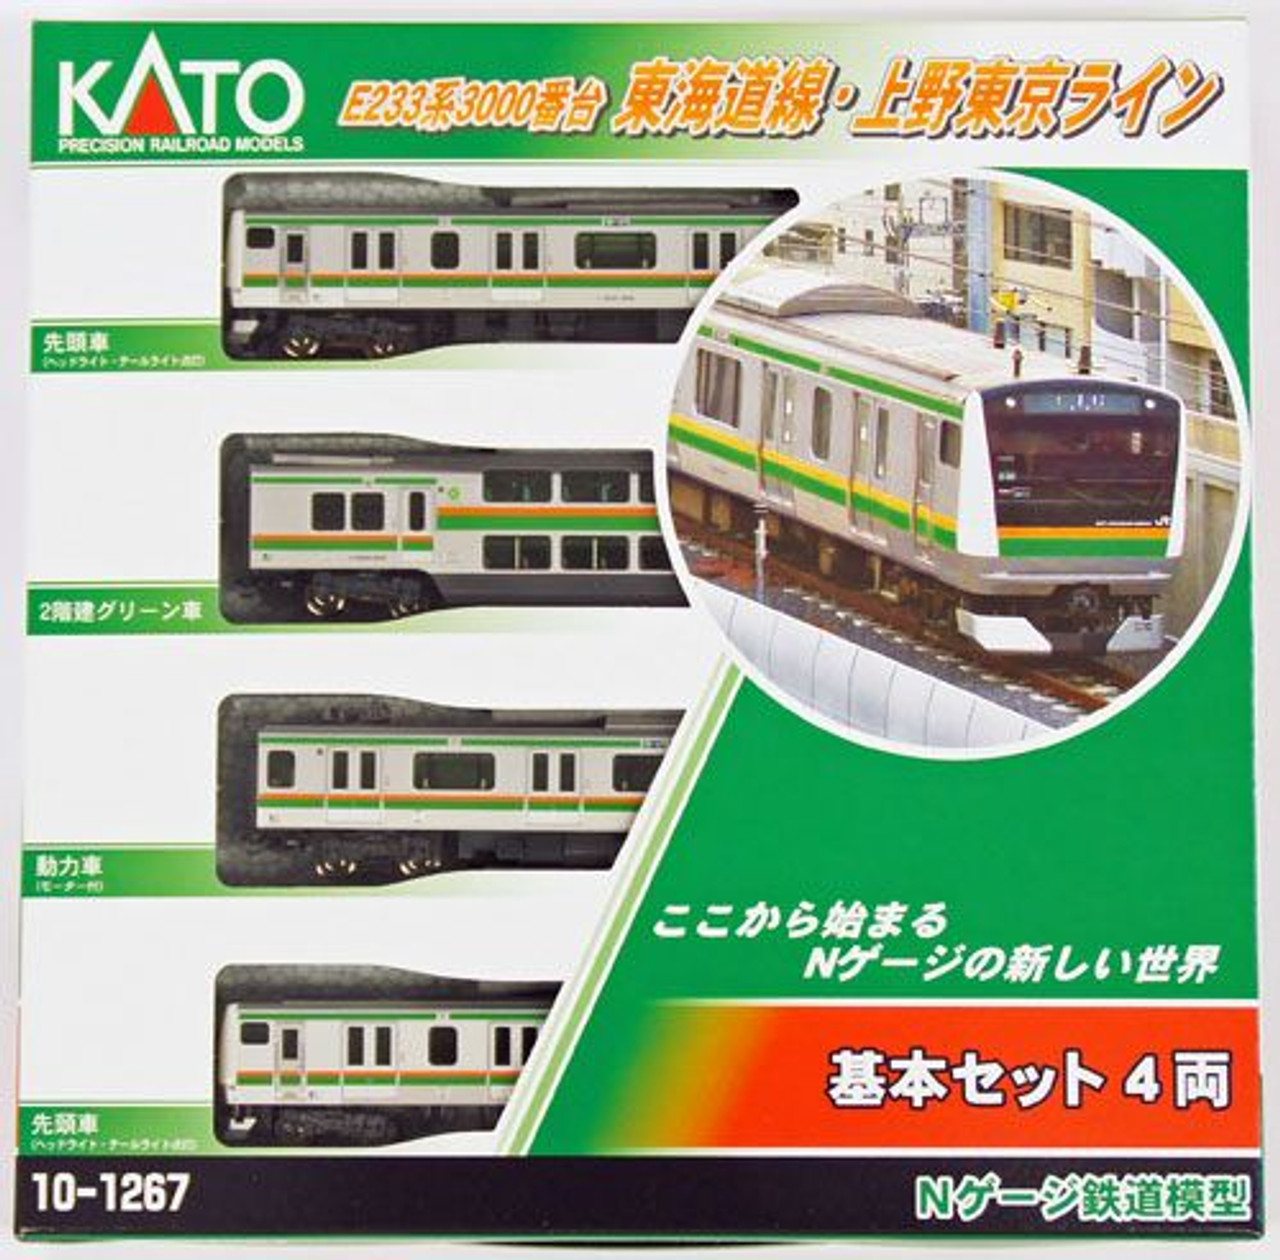 Kato 10-1267 JR Series E233-3000 Tokaido/ Ueno Tokyo Line 4 Cars Set (N  scale)